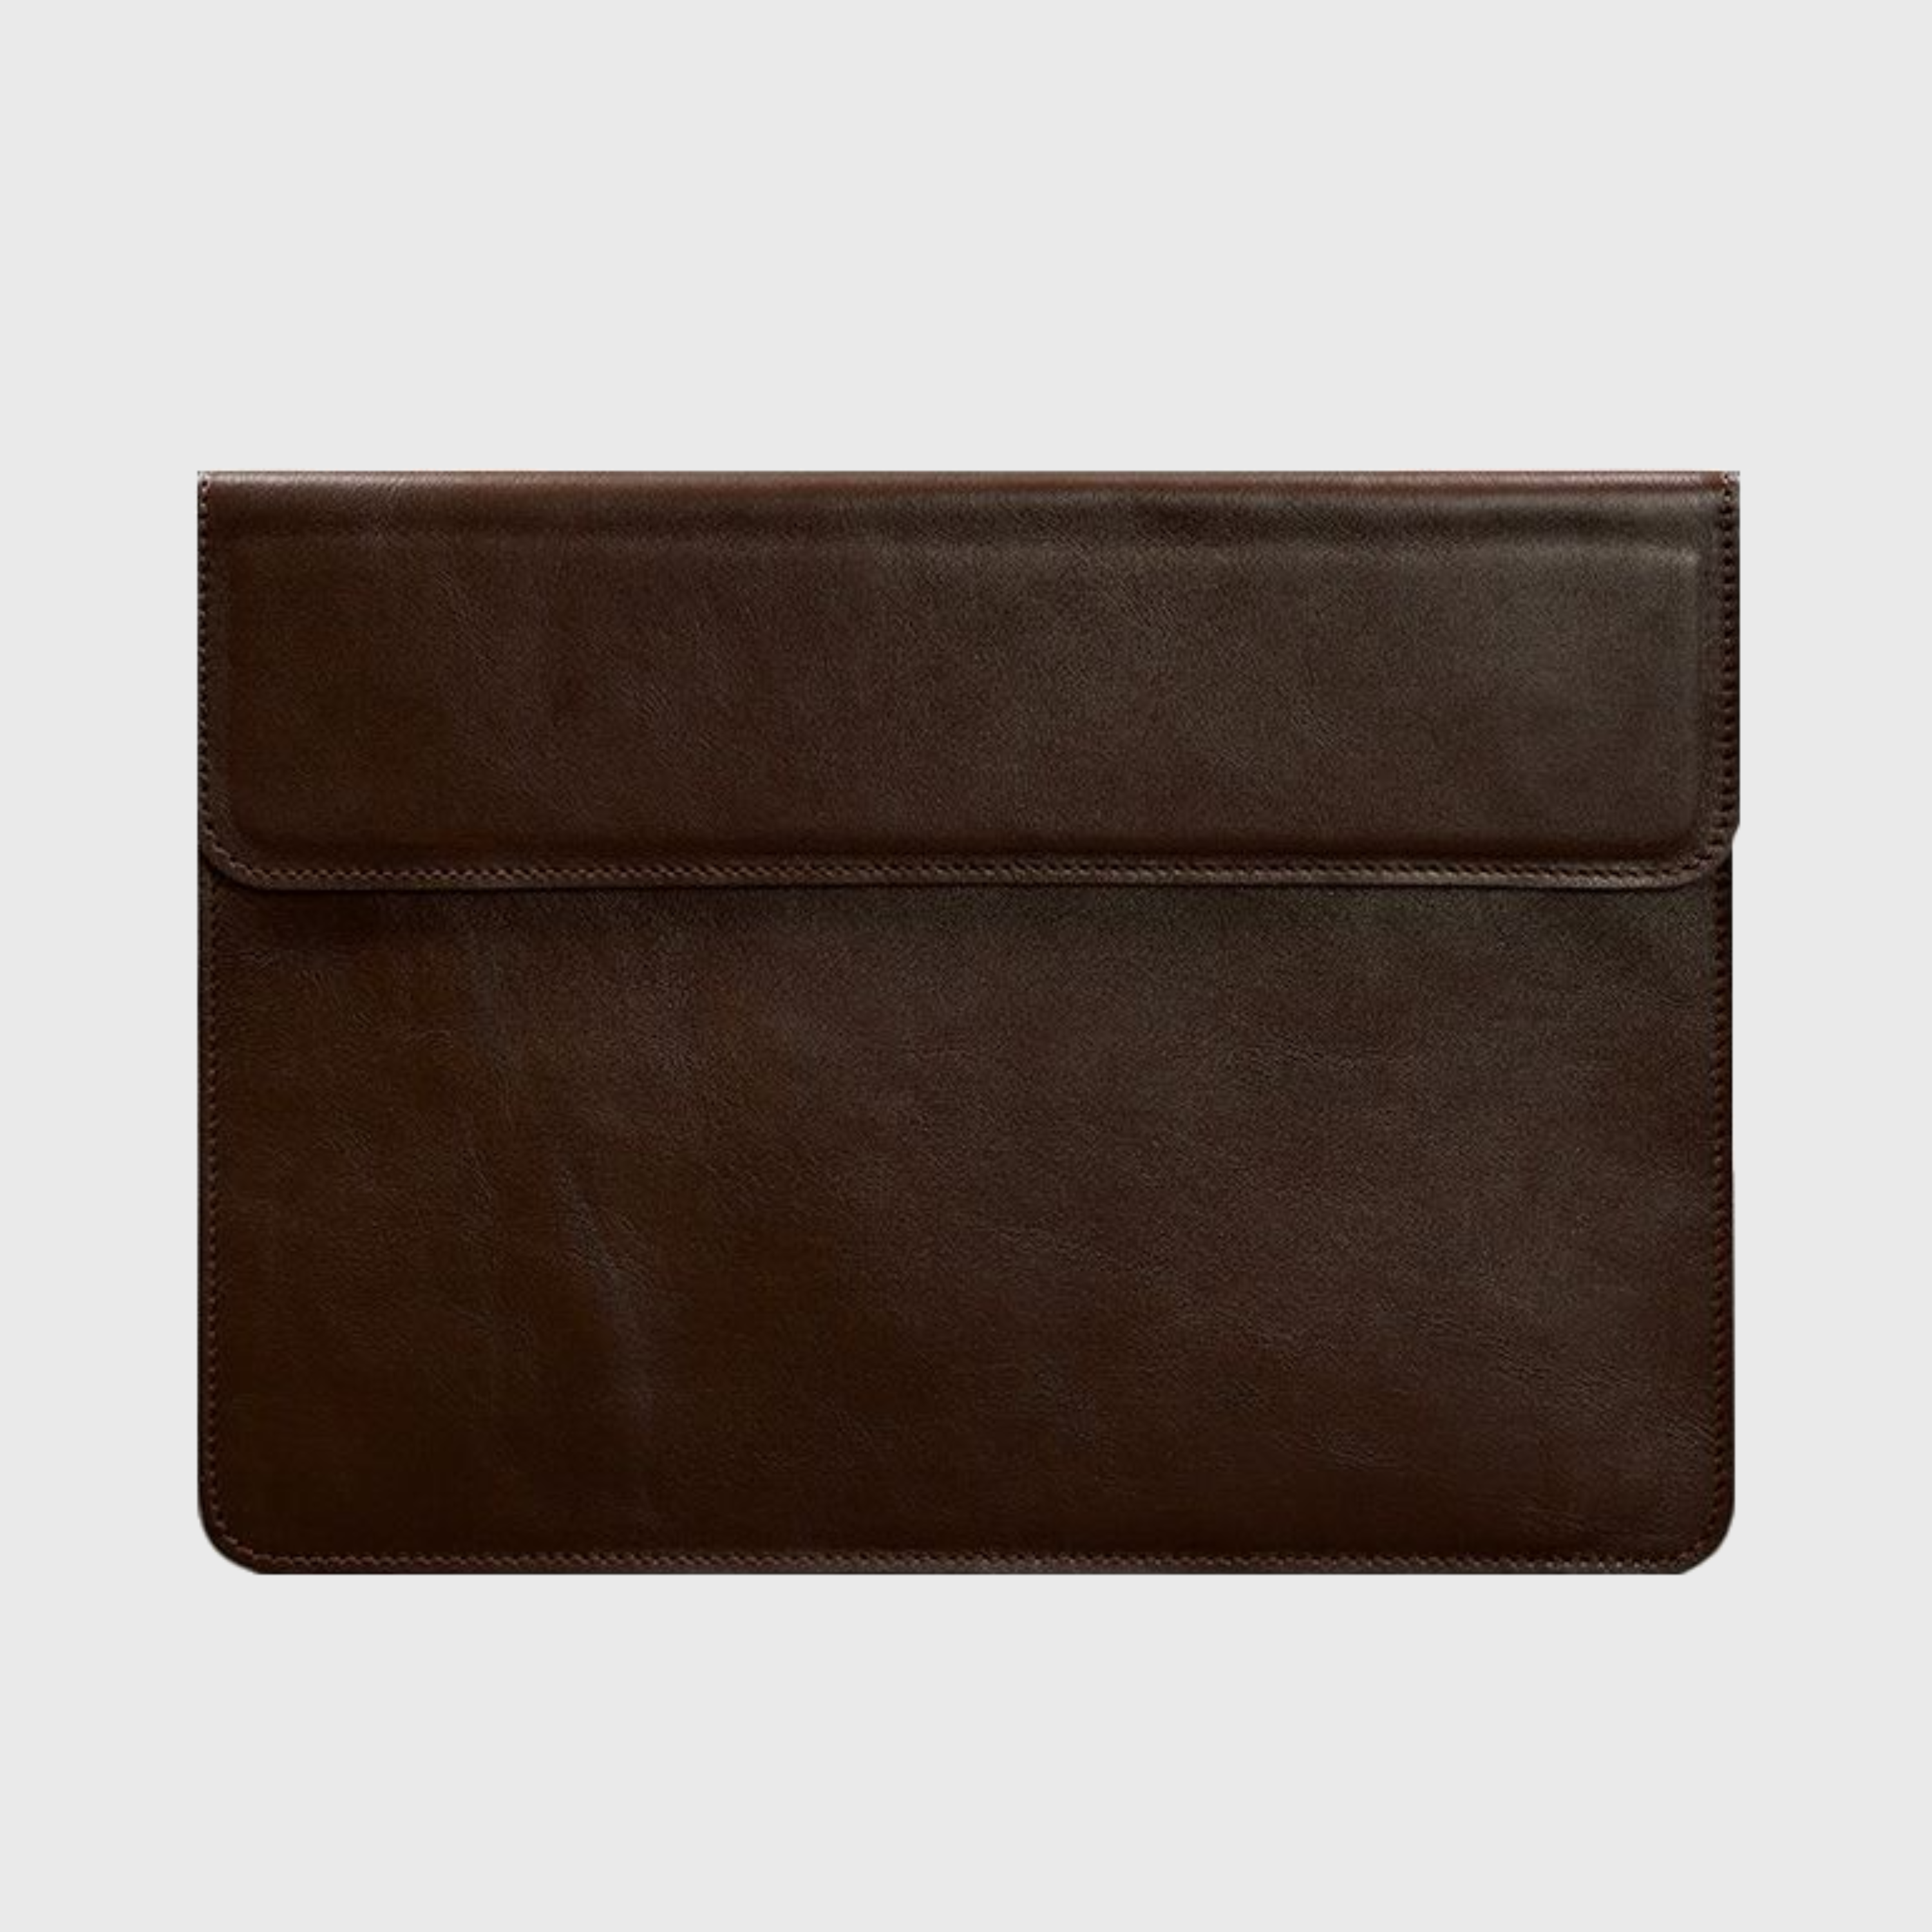  Luxury Leather Laptop Sleeve 13 Inch, Designer MacBook